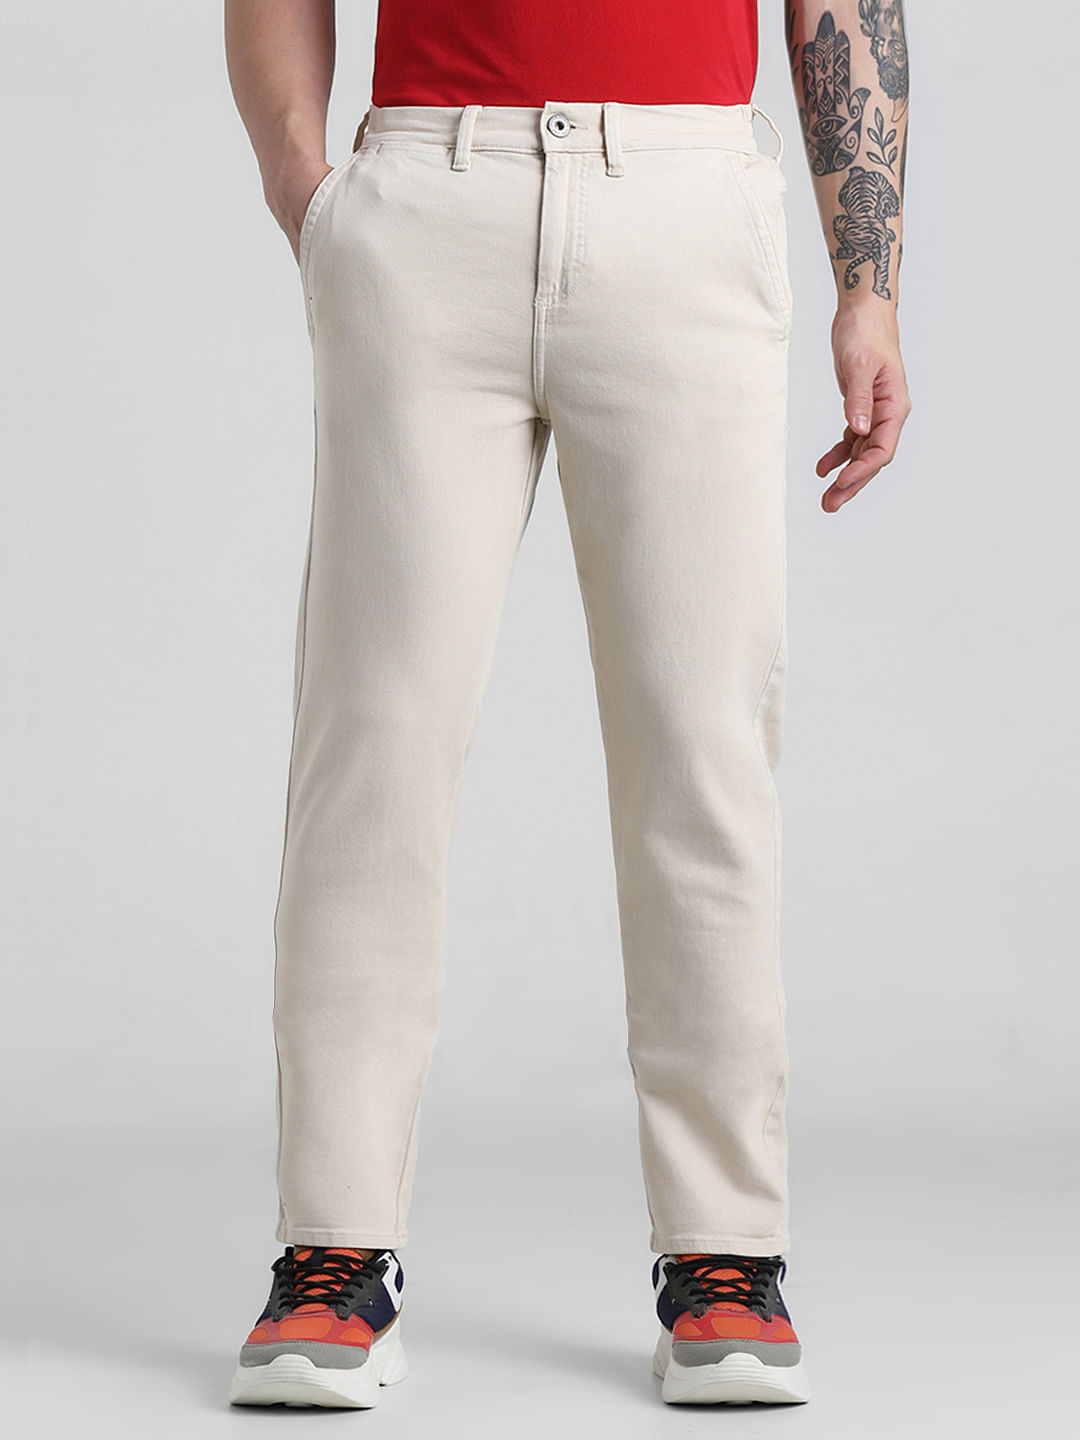 White Linen Pants,linen Pants Men,linen Mens Clothing, Quality Soft  Linen,organic Classic Clothing for Men , Boho Minimalist Linen Pants - Etsy